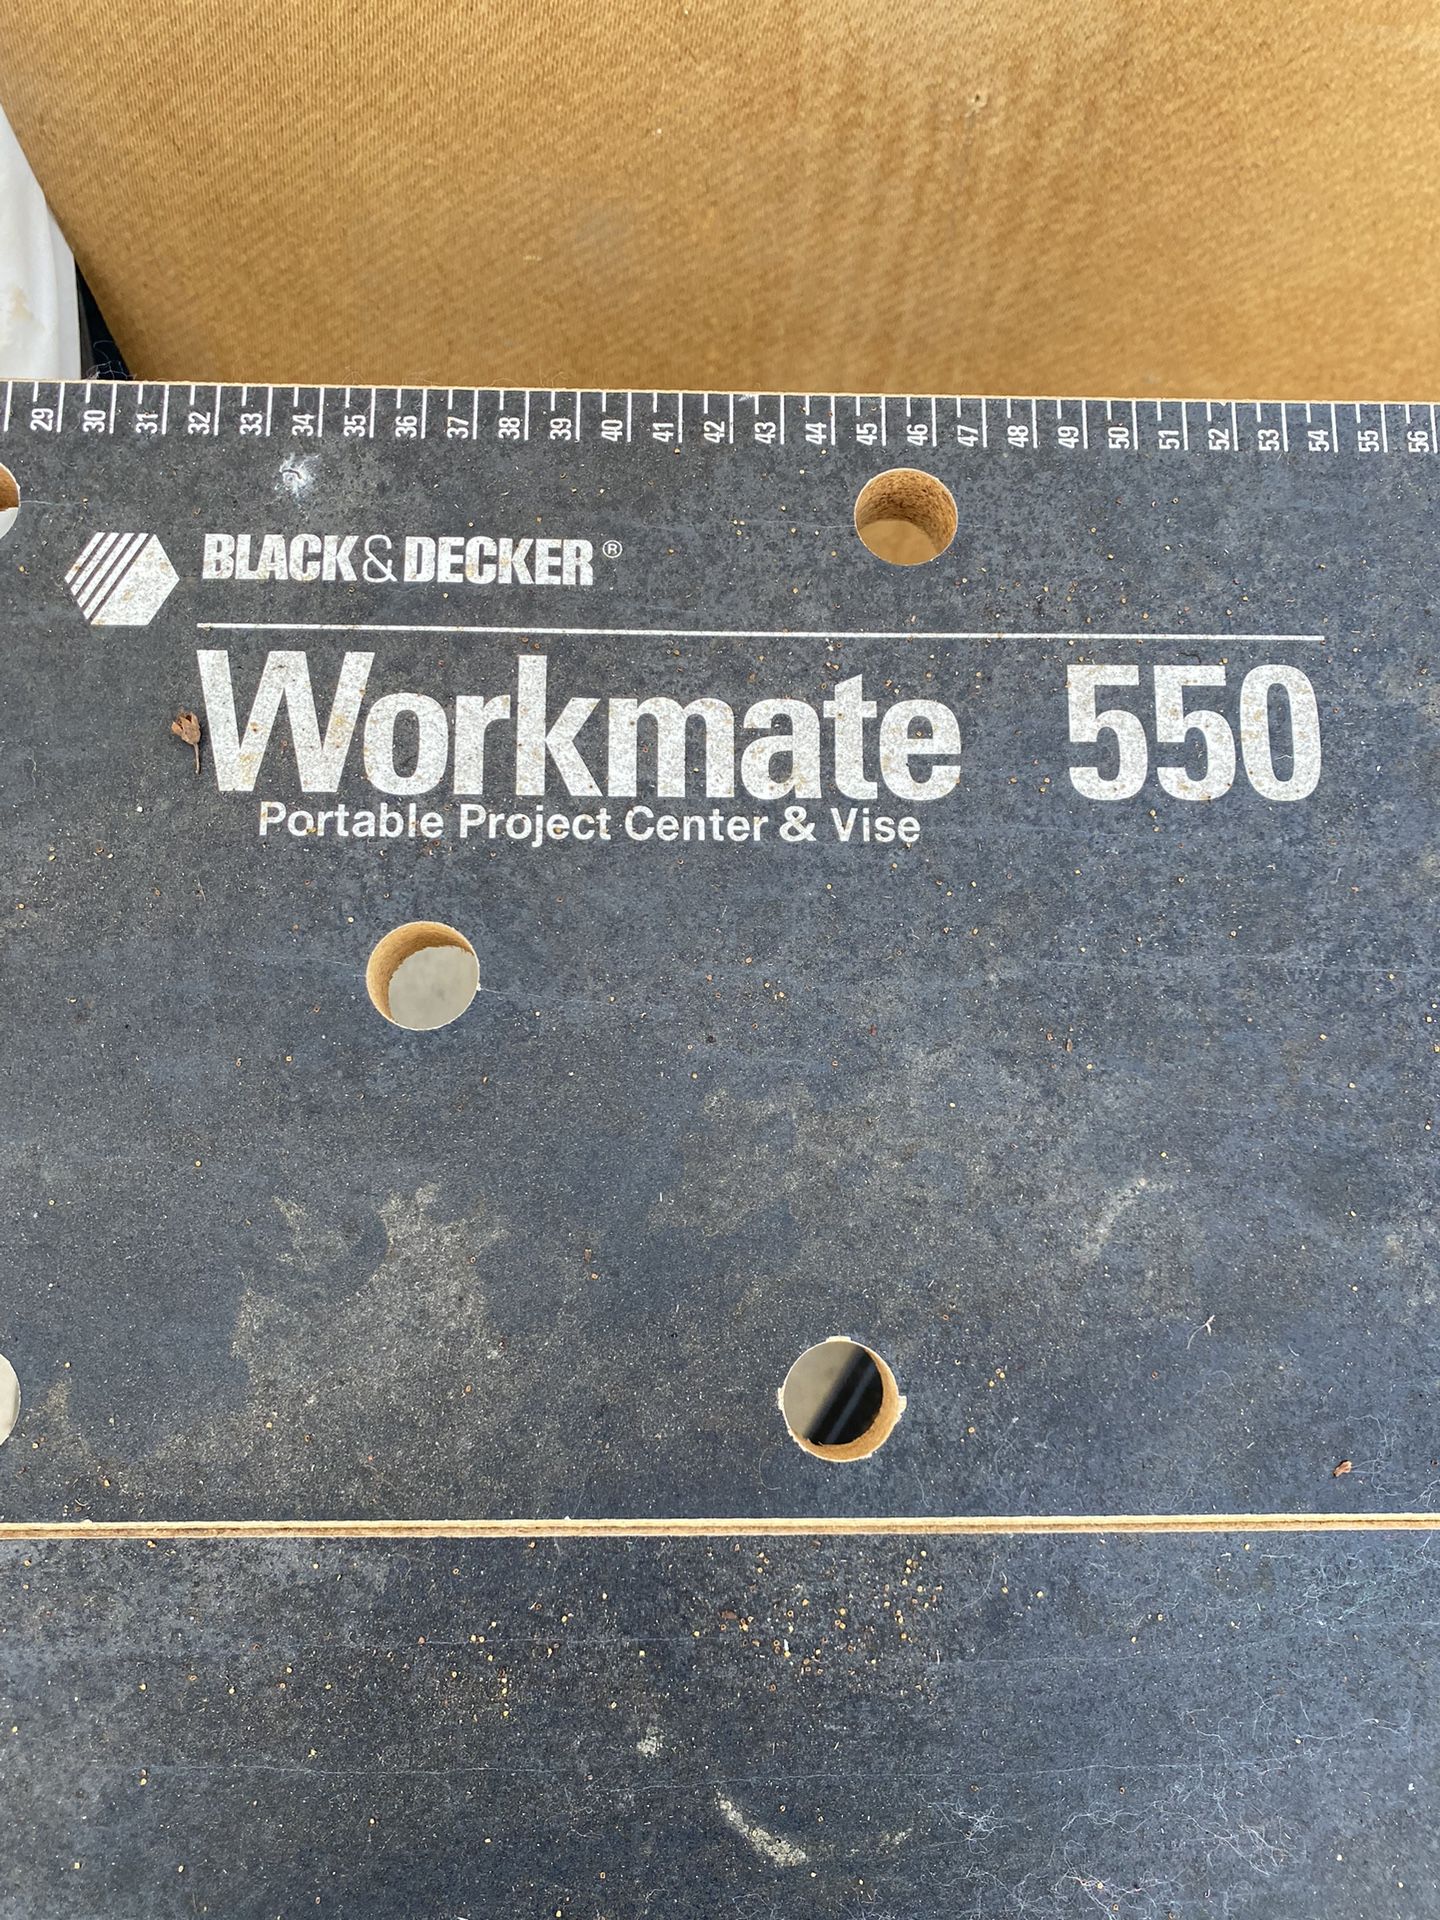 Black & Decker Workmate 550 Portable Project